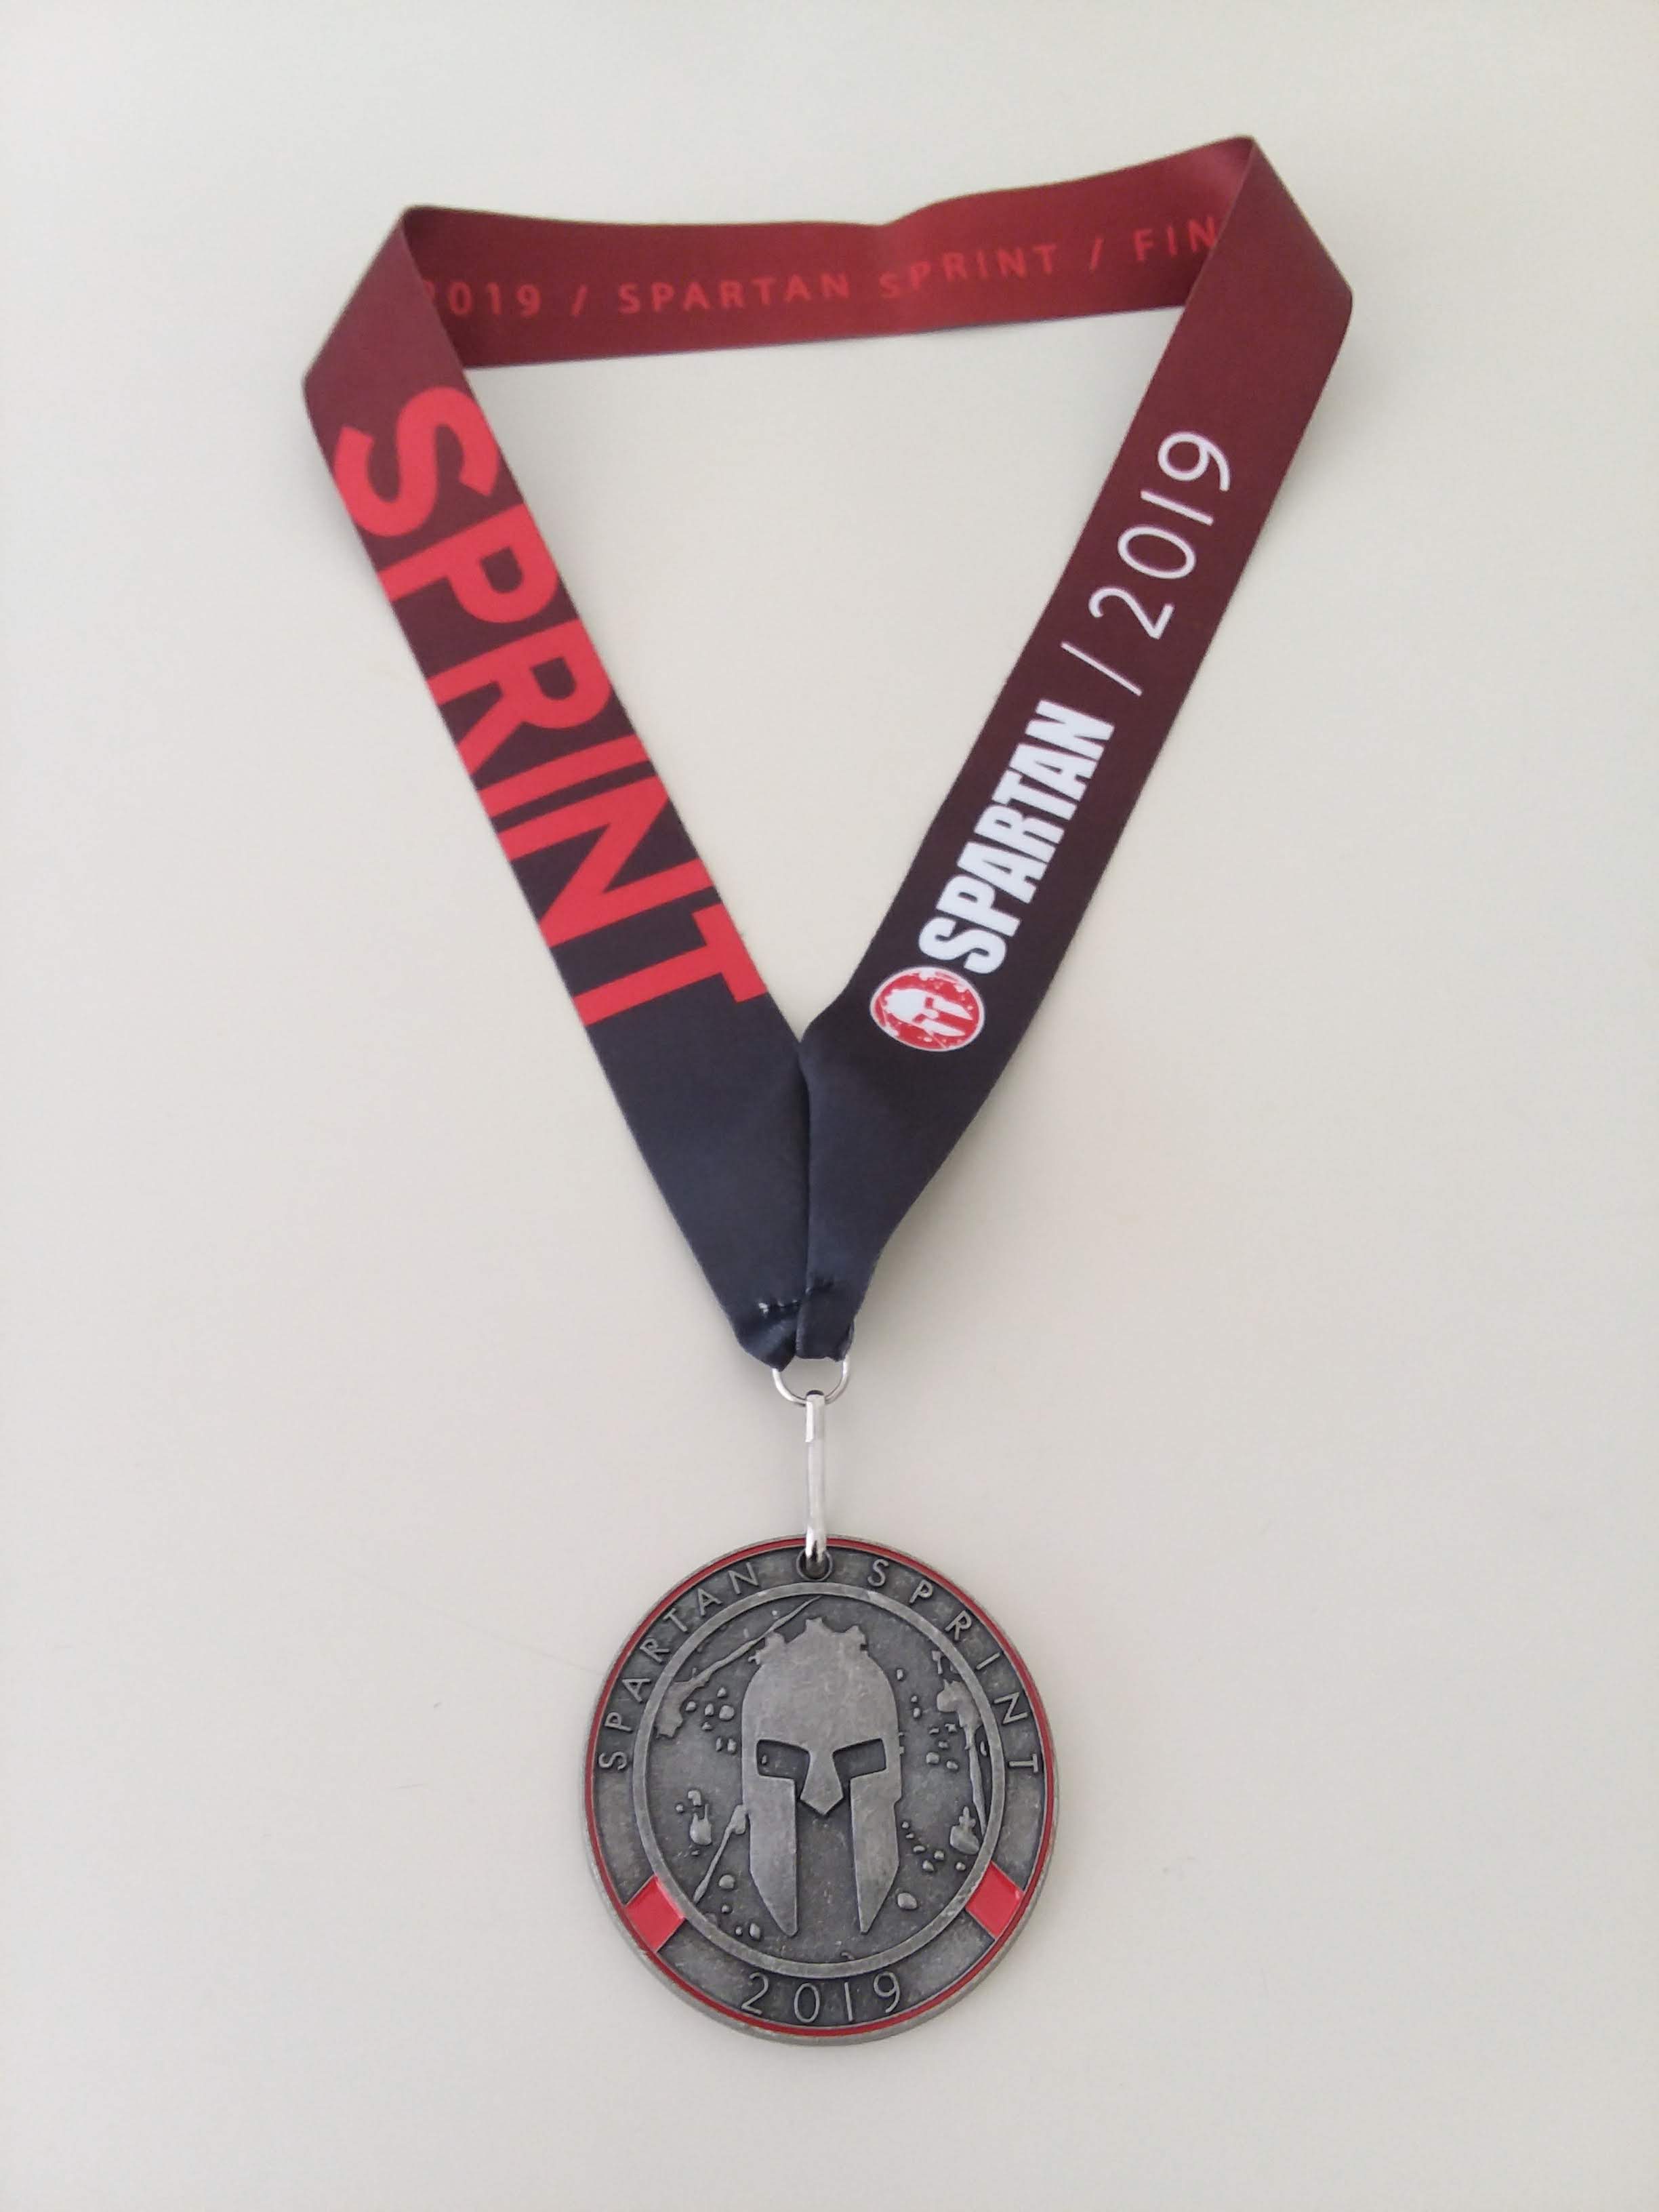 Spartan_Medal_Finisher_2019_Sprint